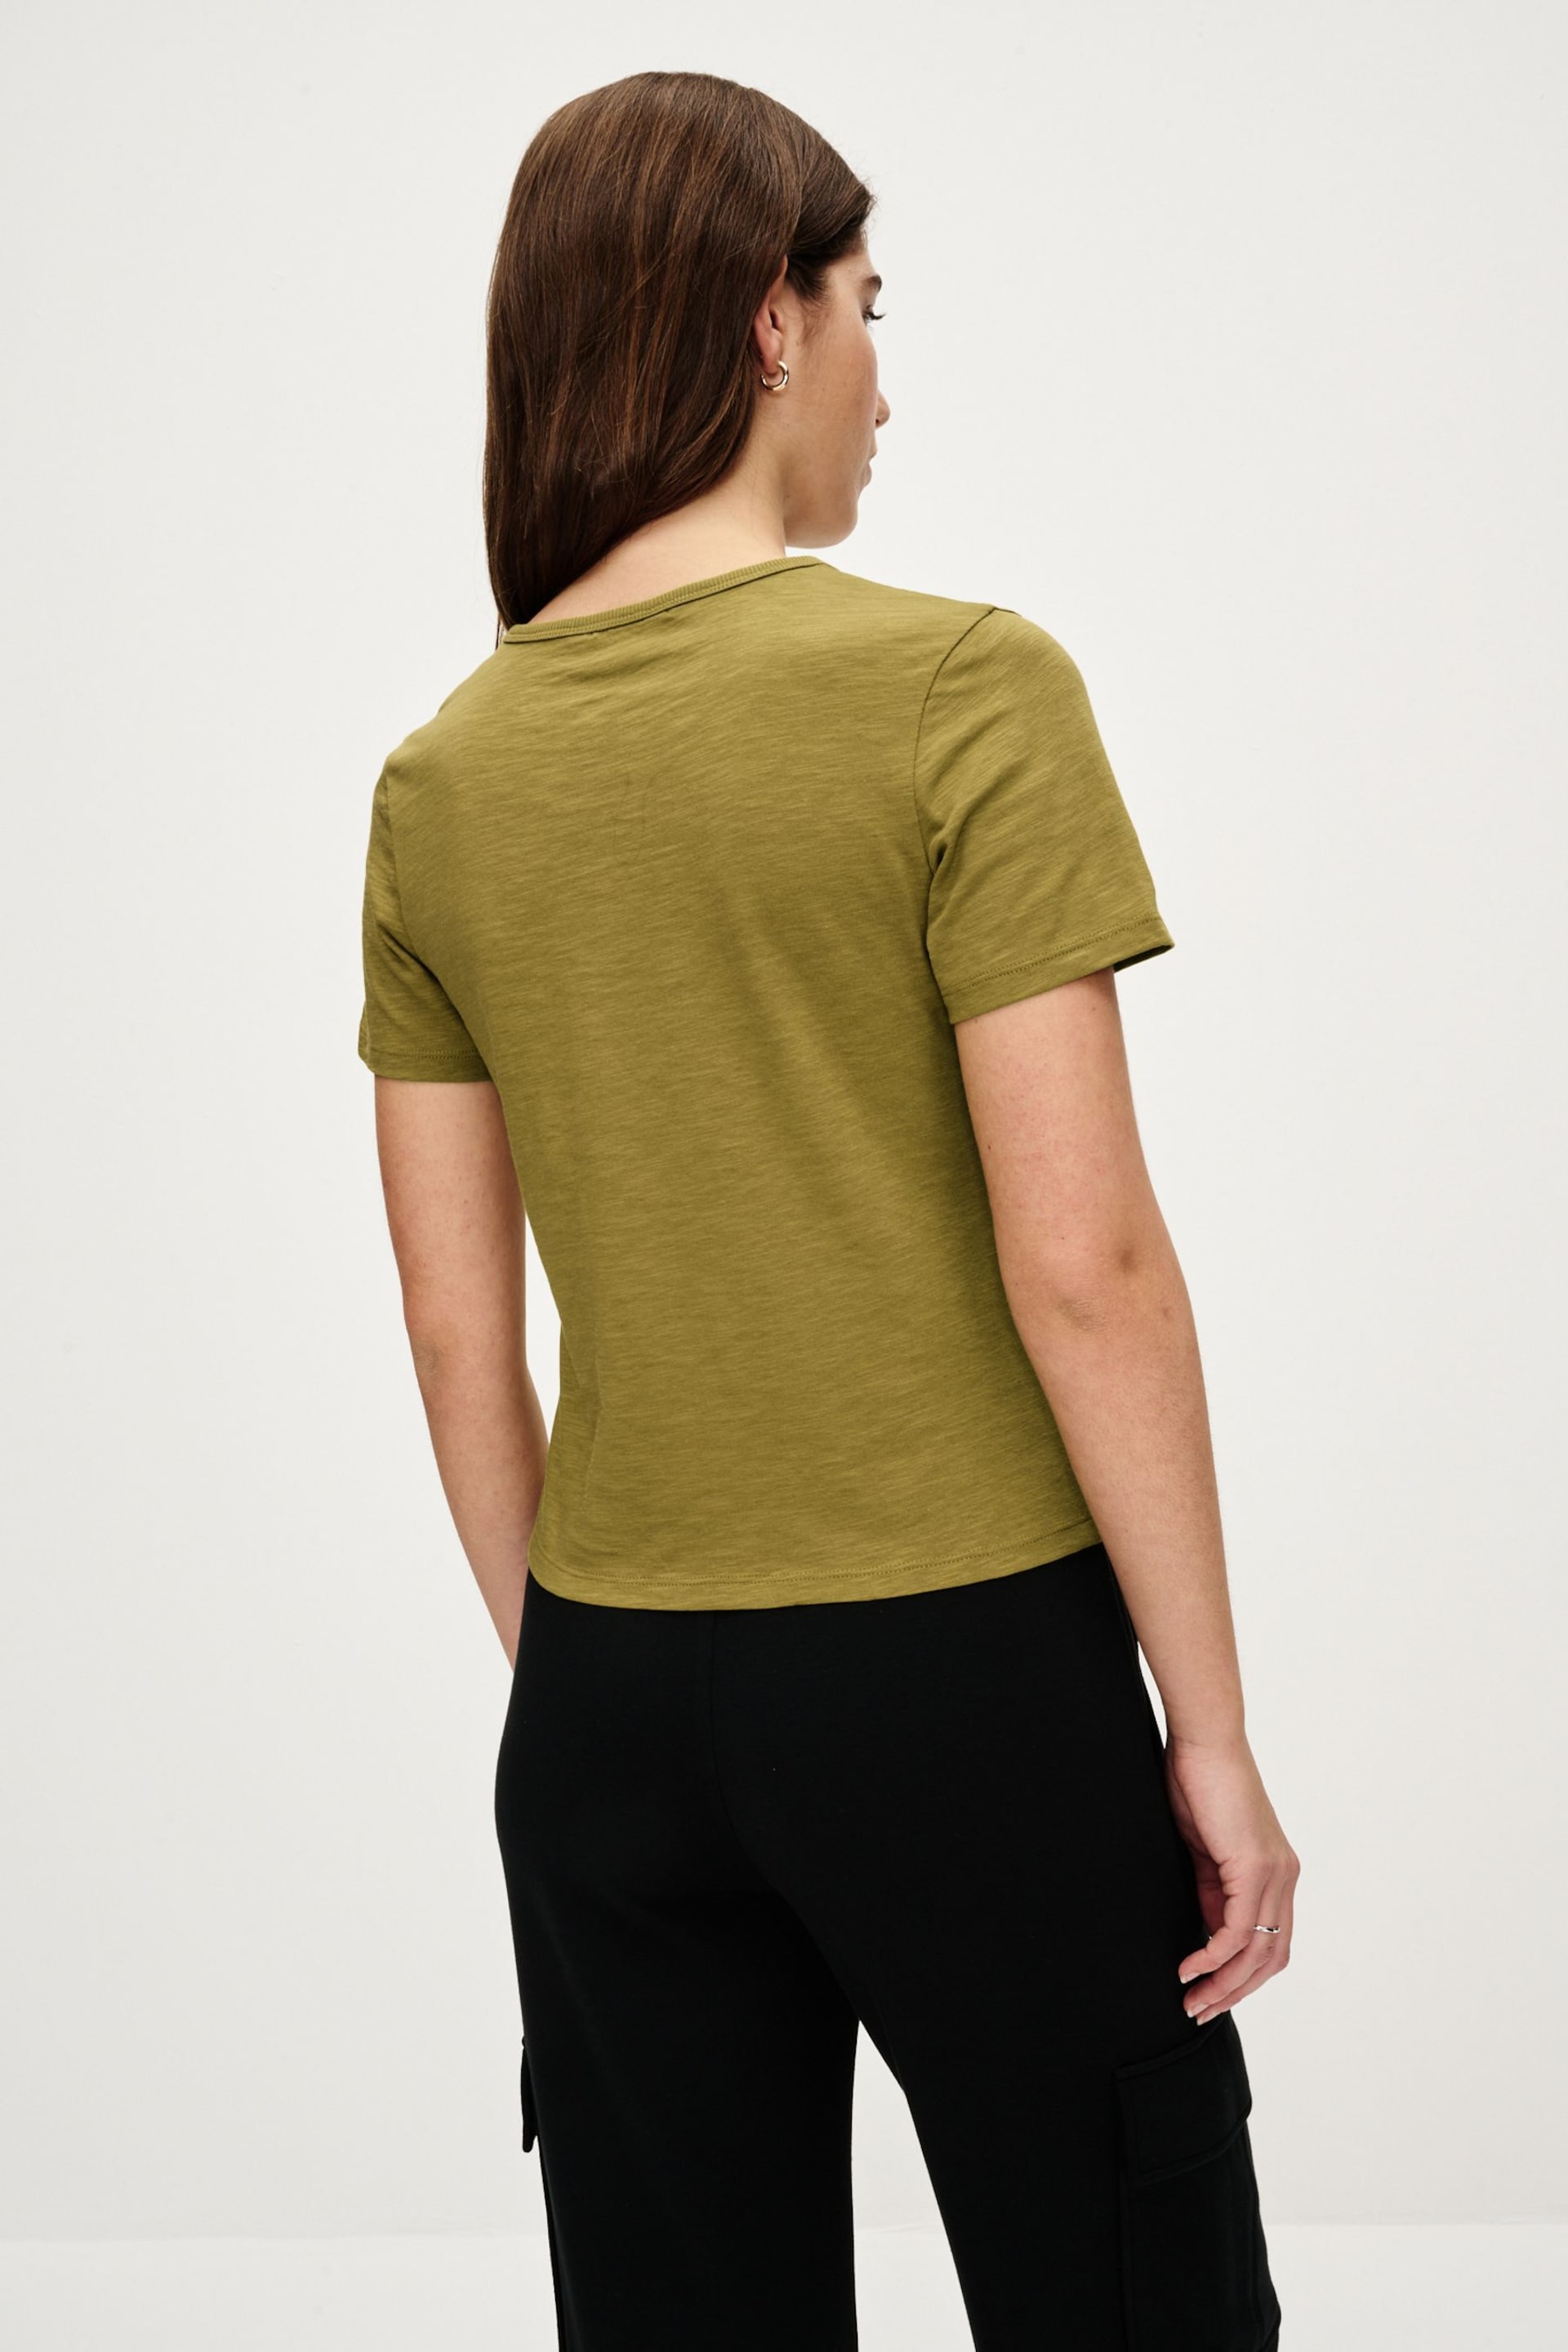 Khaki Green Slim Fit Short Sleeve Graphic T-Shirt - Image 4 of 7